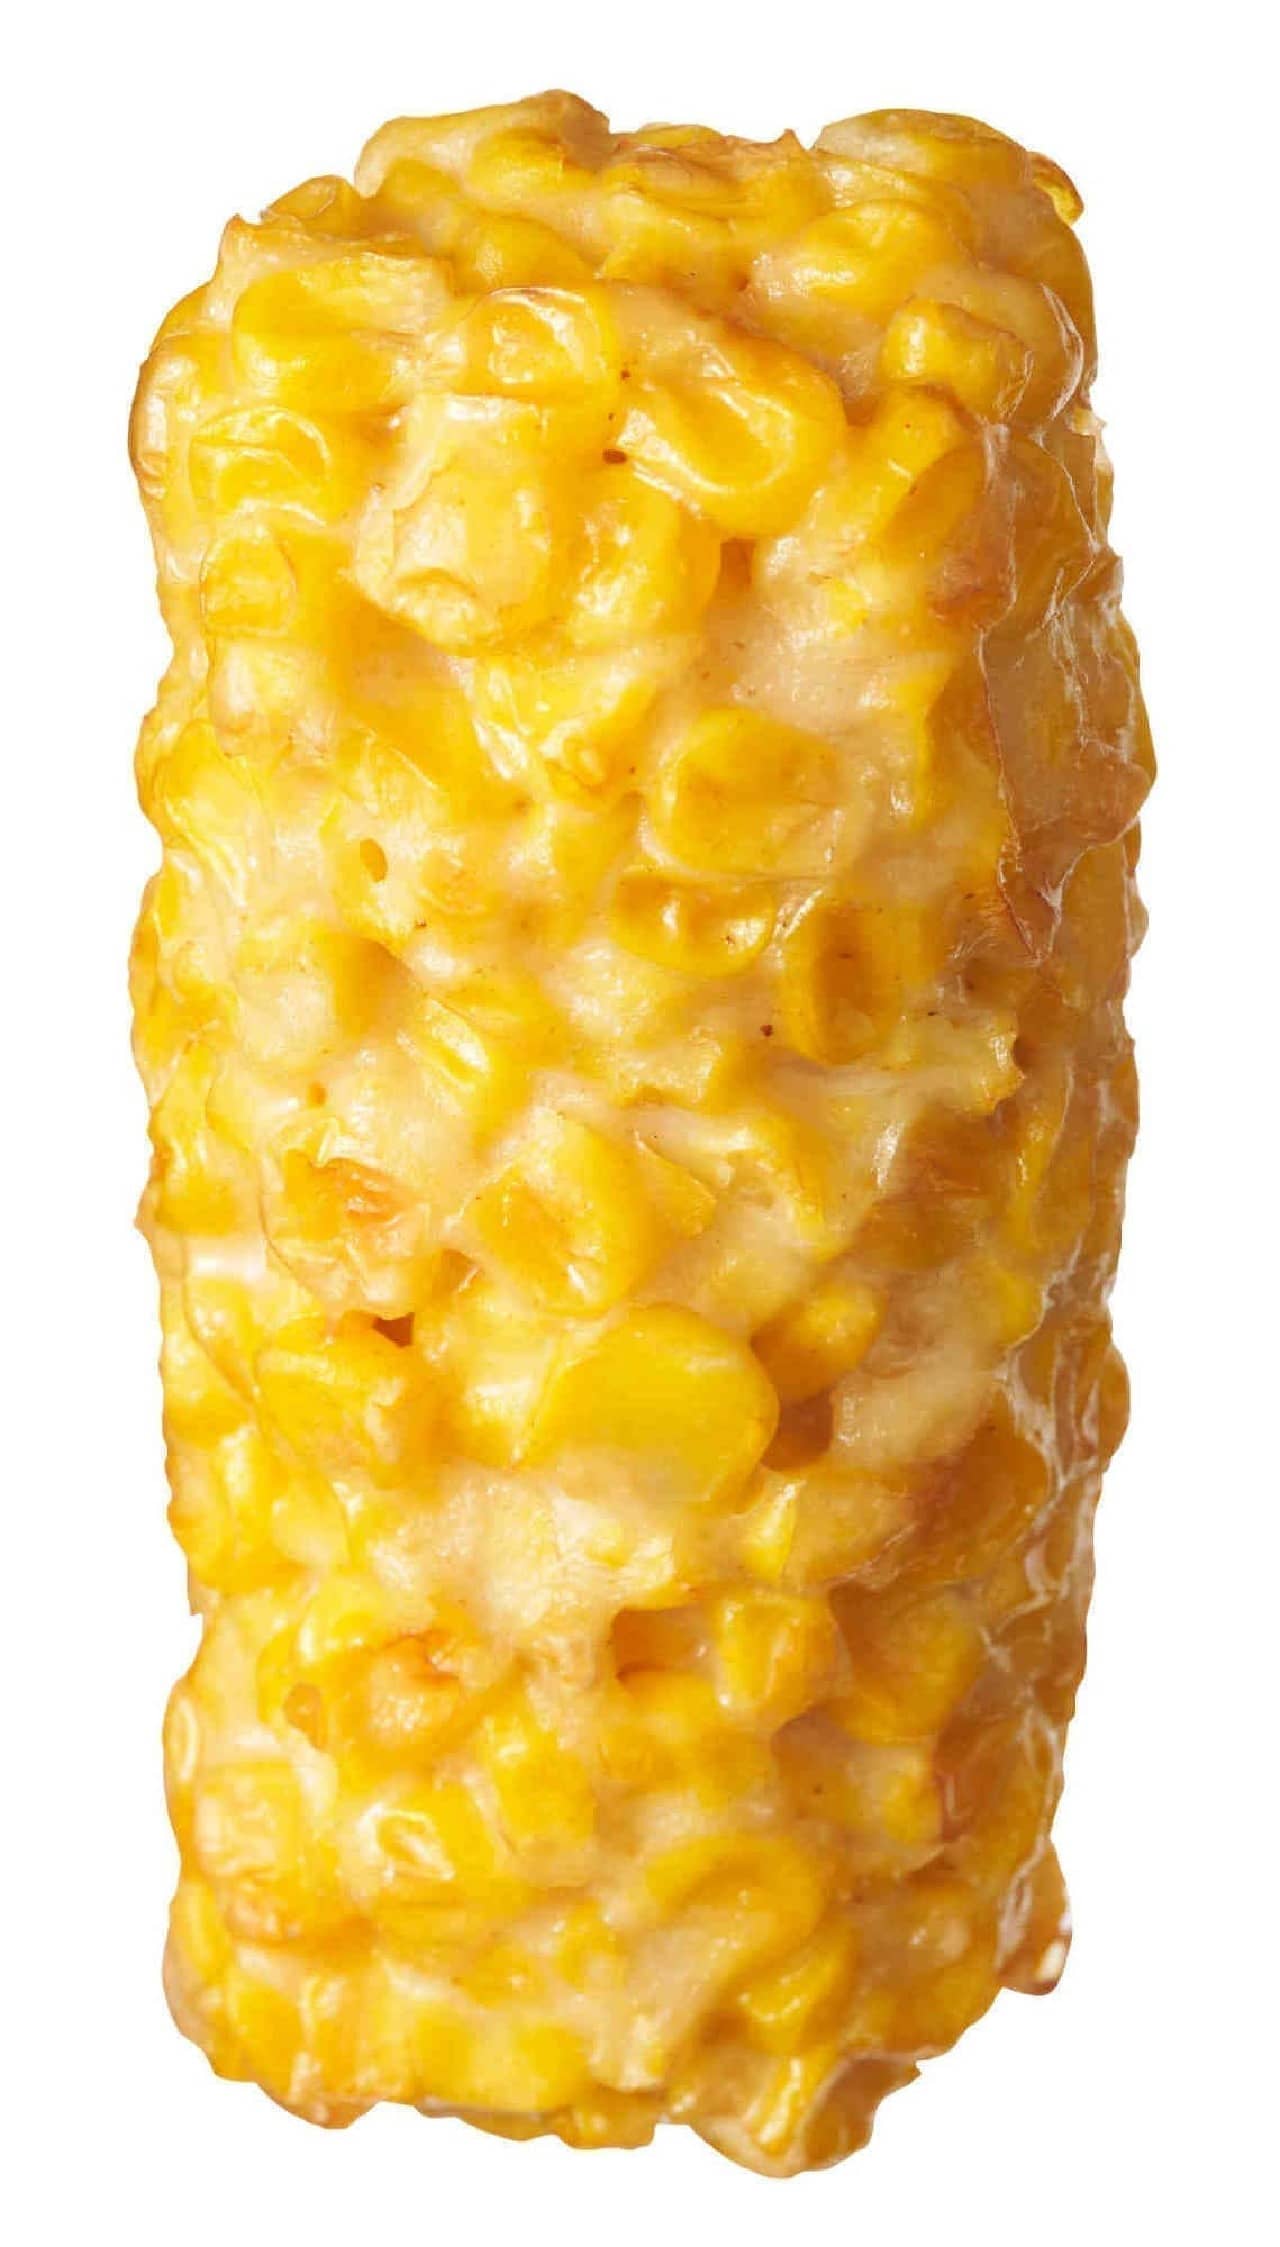 Ministop "fried corn"